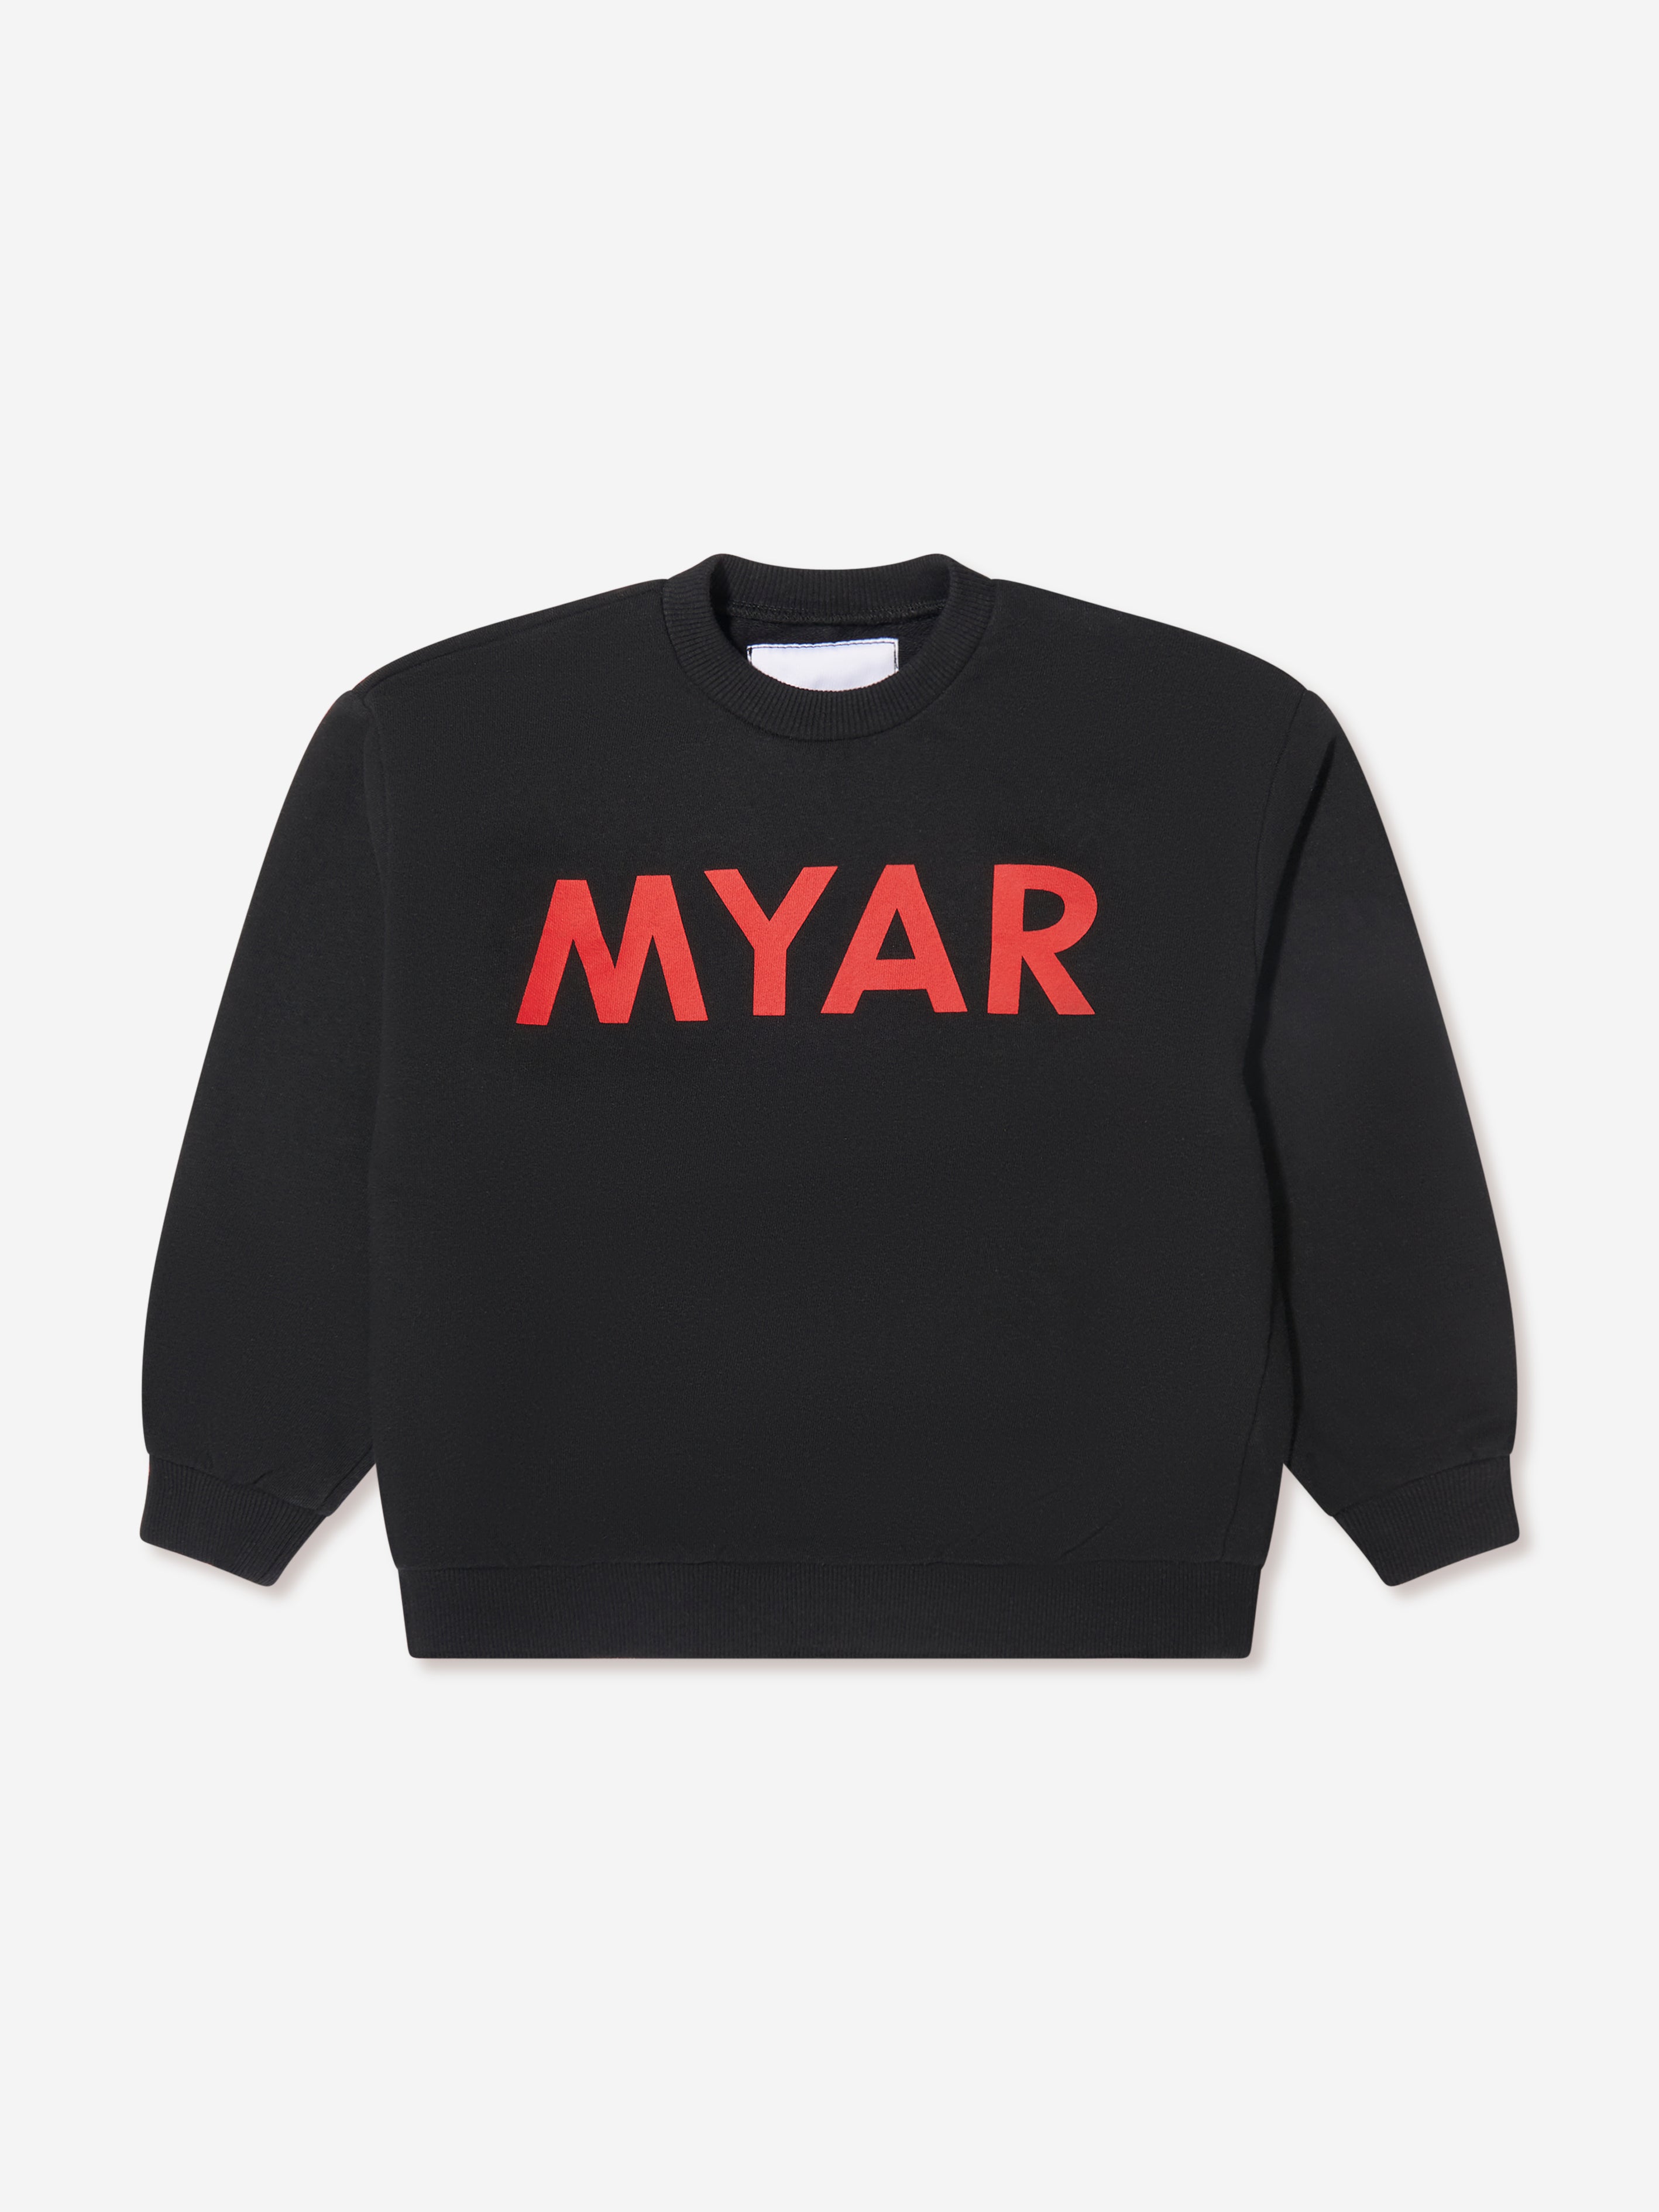 Myar キッズロゴスウェットシャツ | Childsplay Clothing